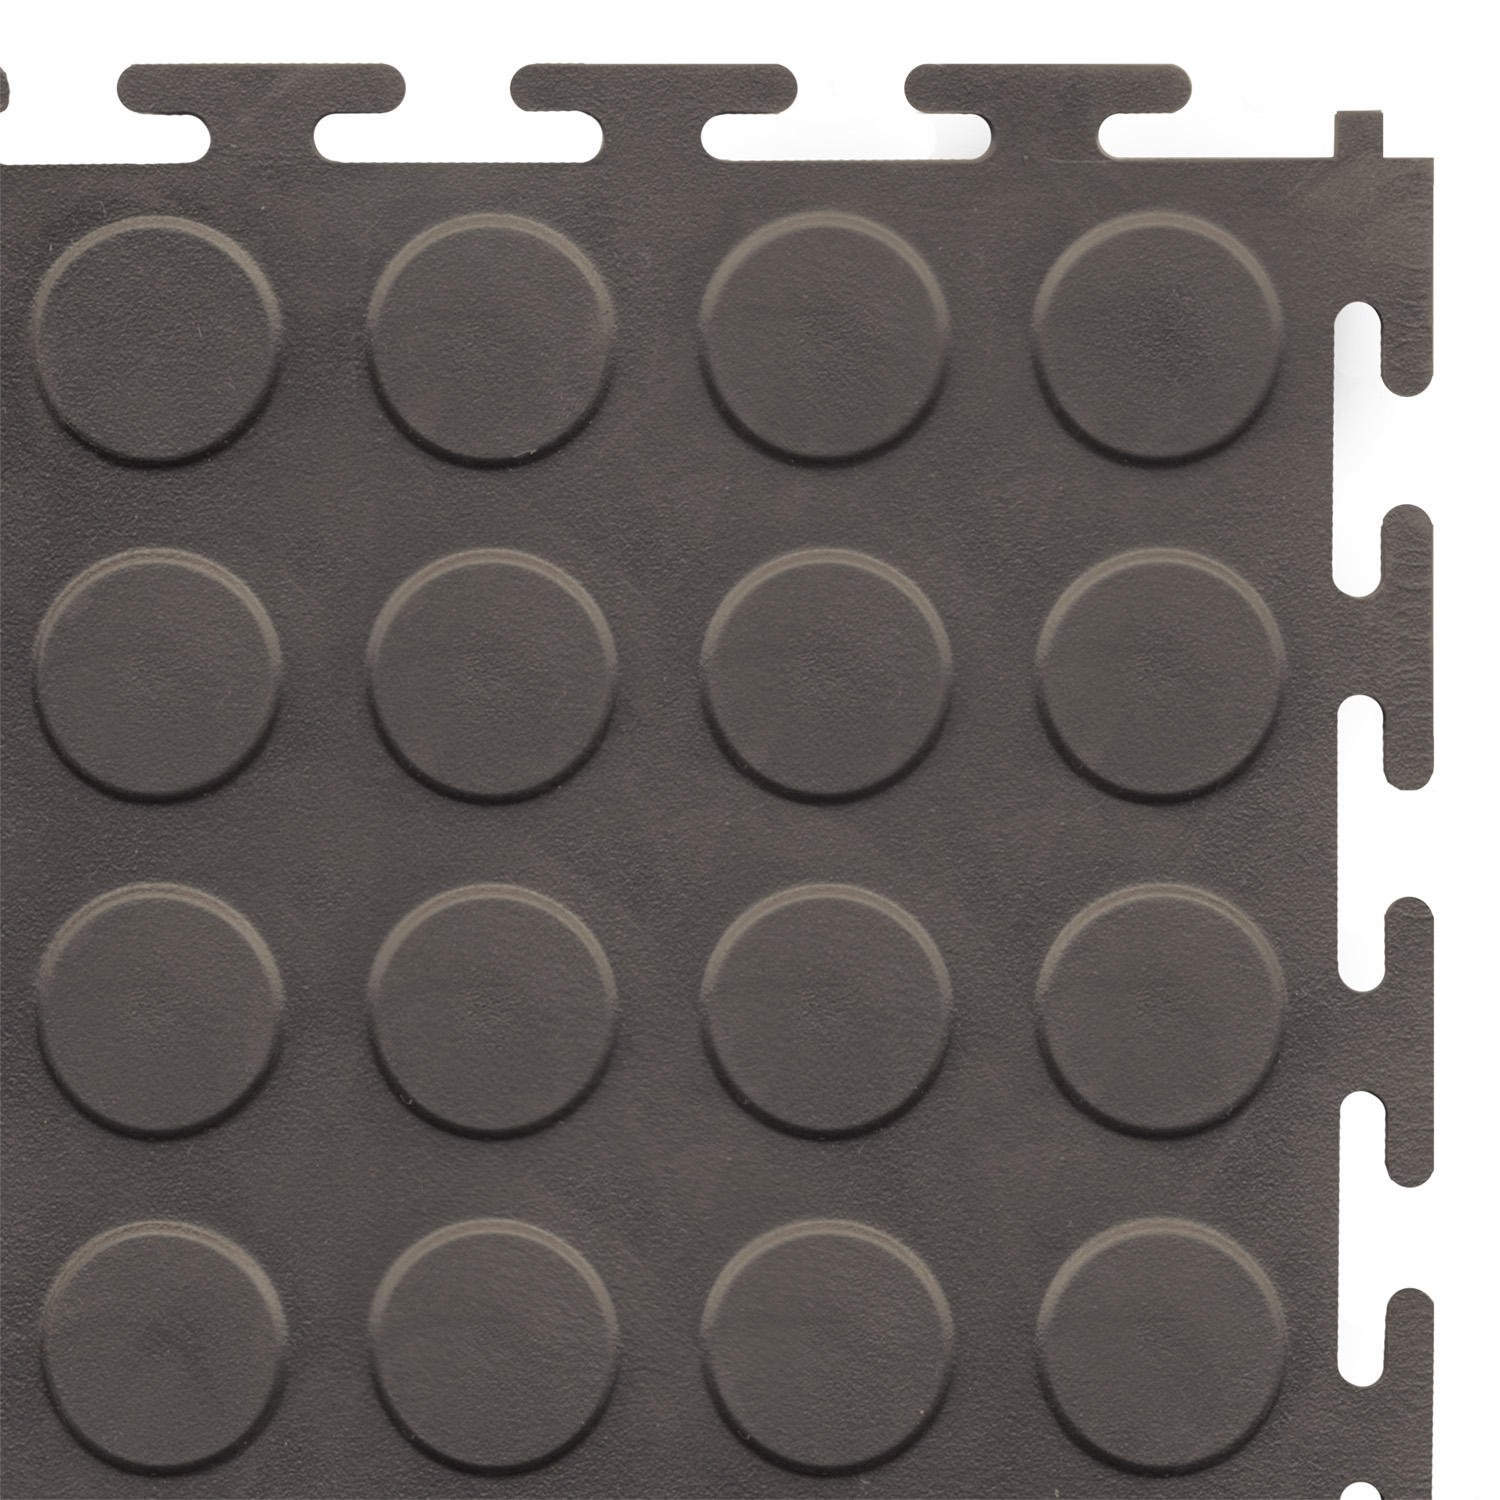 Heavy-duty floor tile (dark grey/studded)